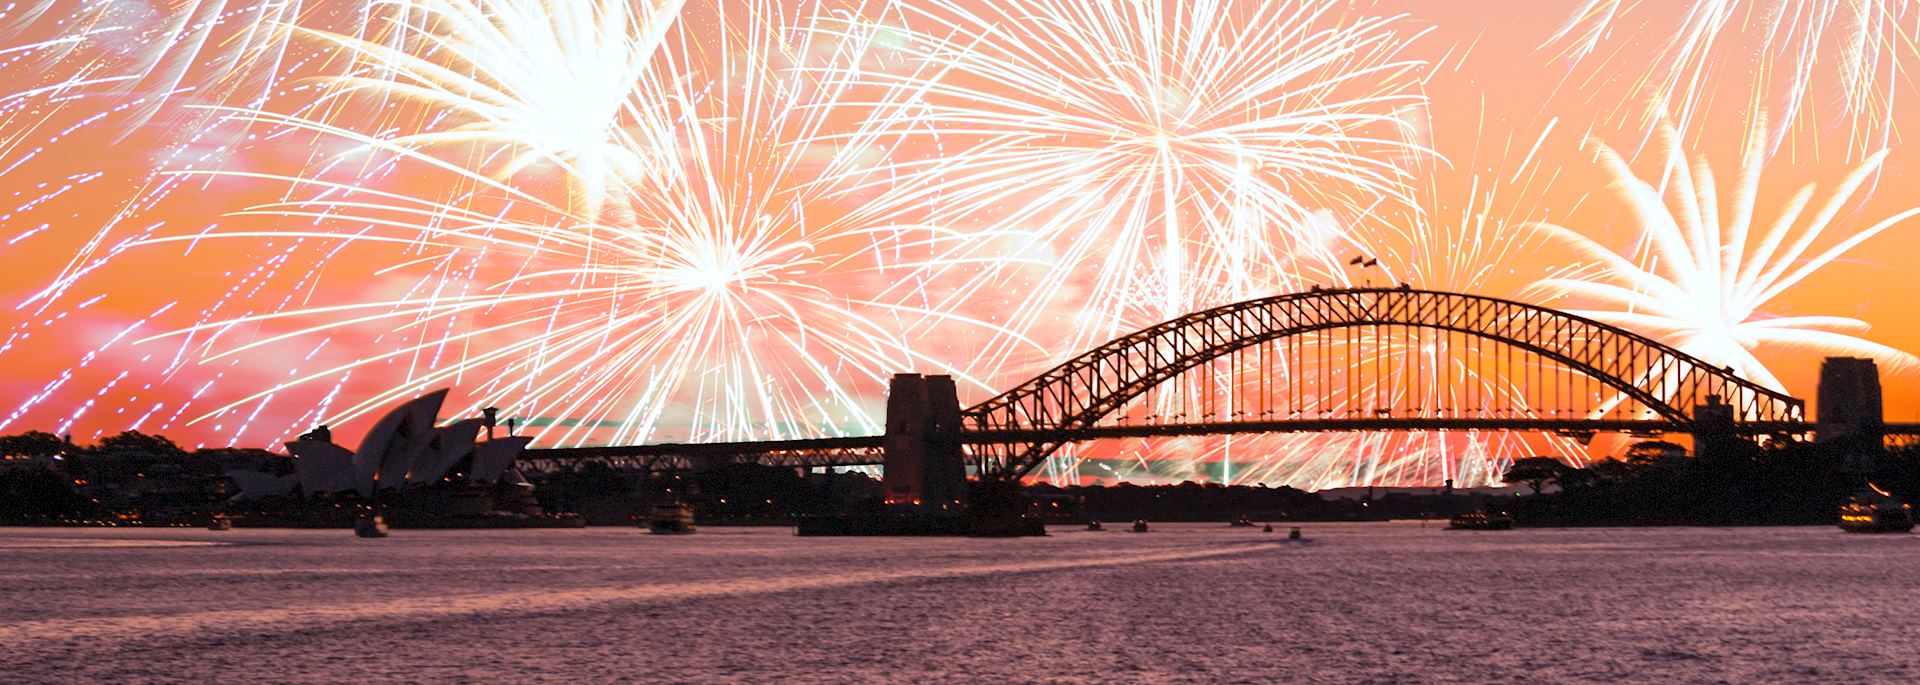 Sydney fireworks, Australia